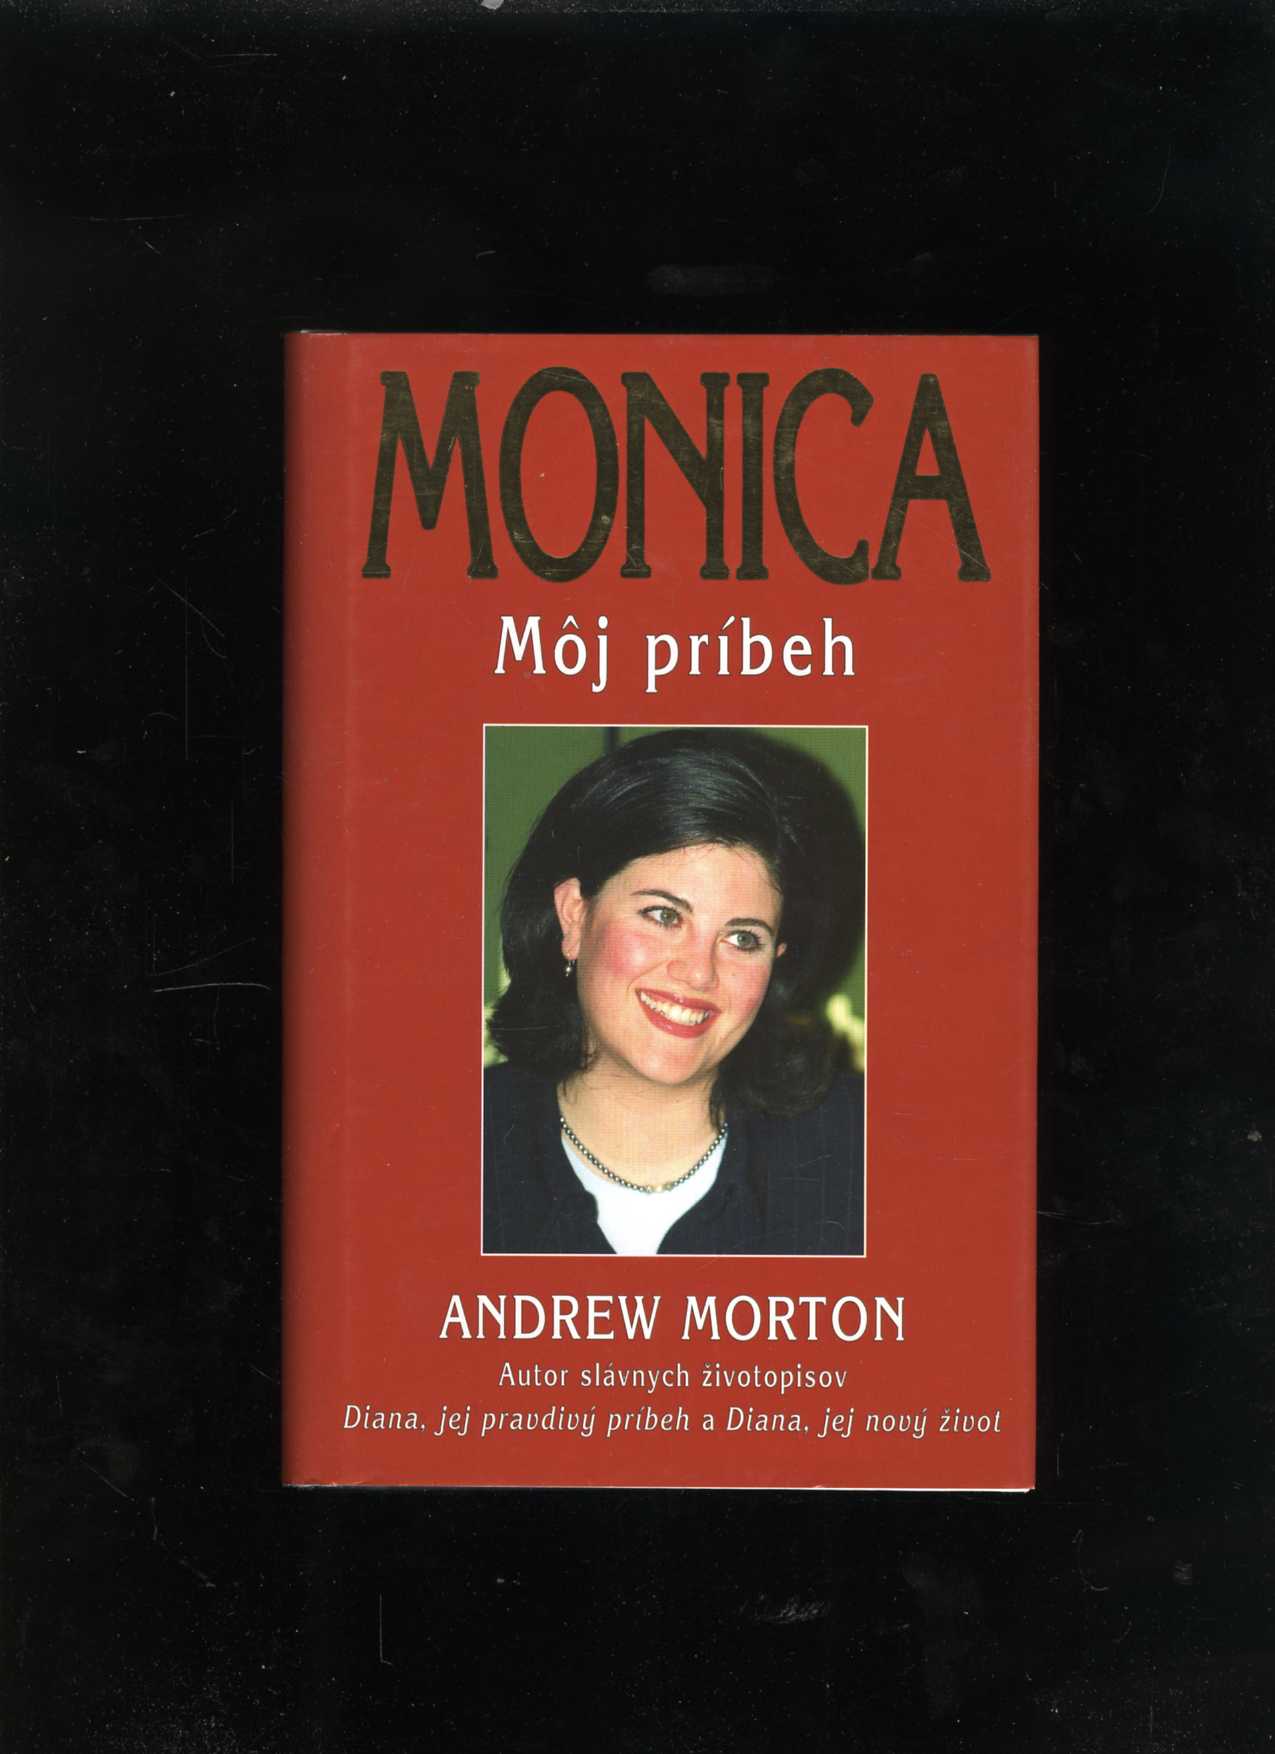 Monica – môj príbeh (Andrew Morton)